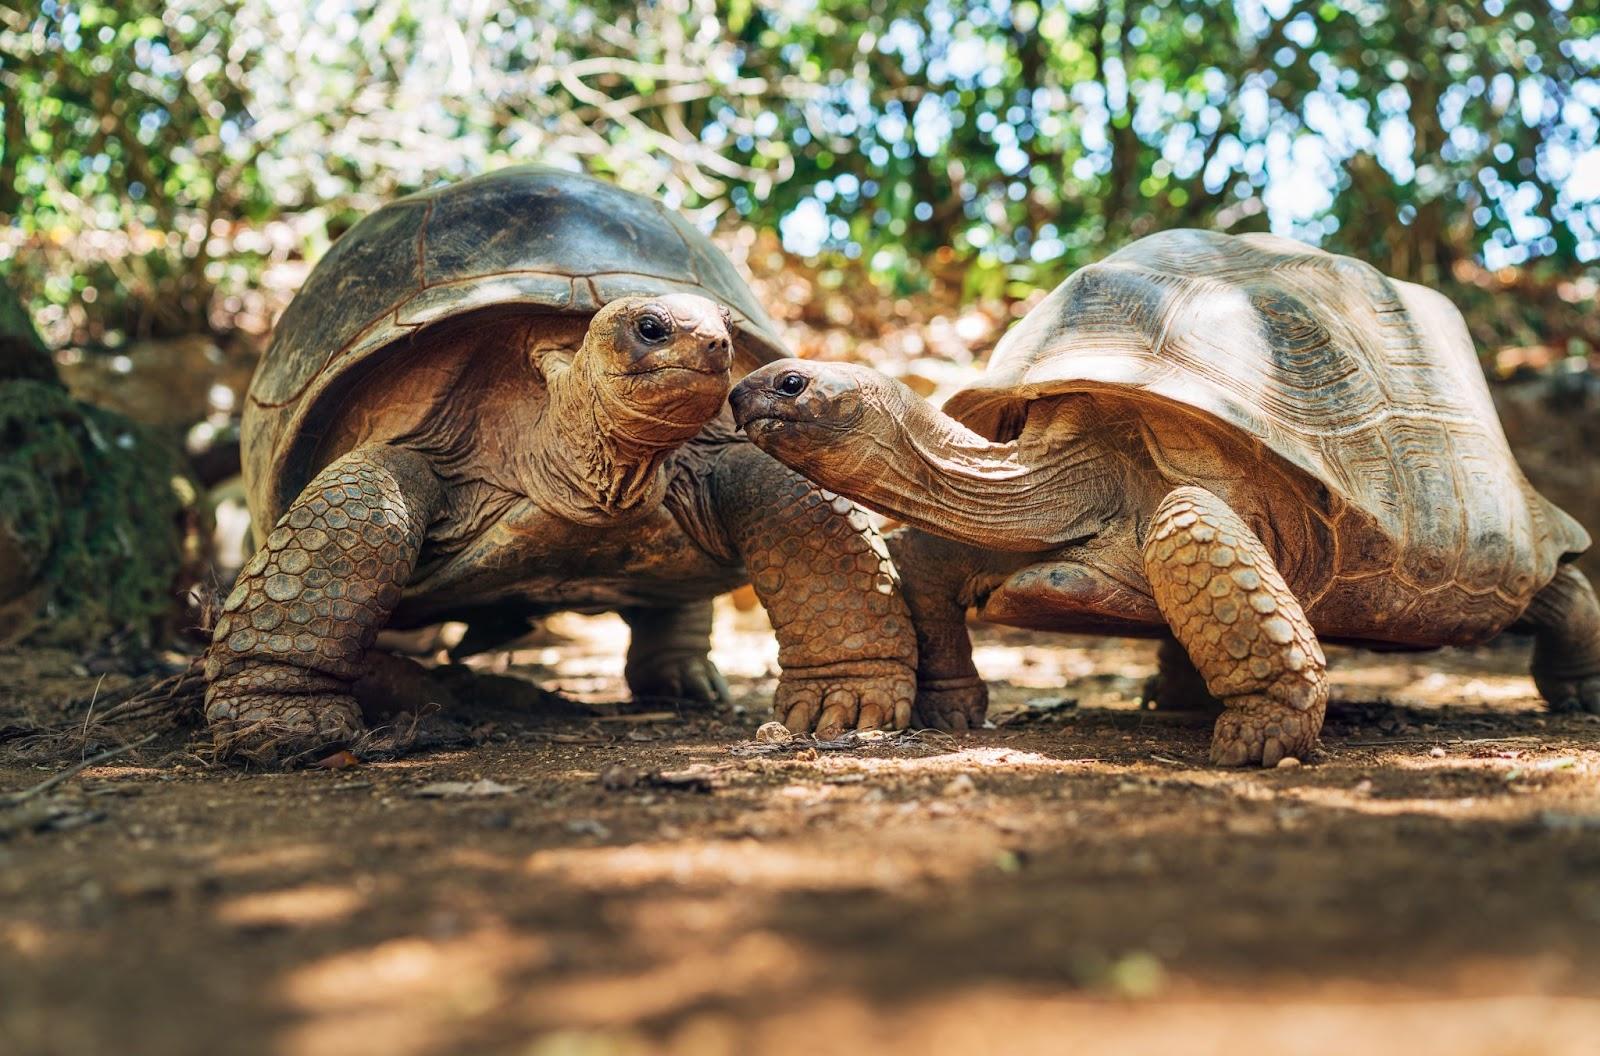 Couple of Aldabra giant tortoises in zoo Nature park on Mauritius island